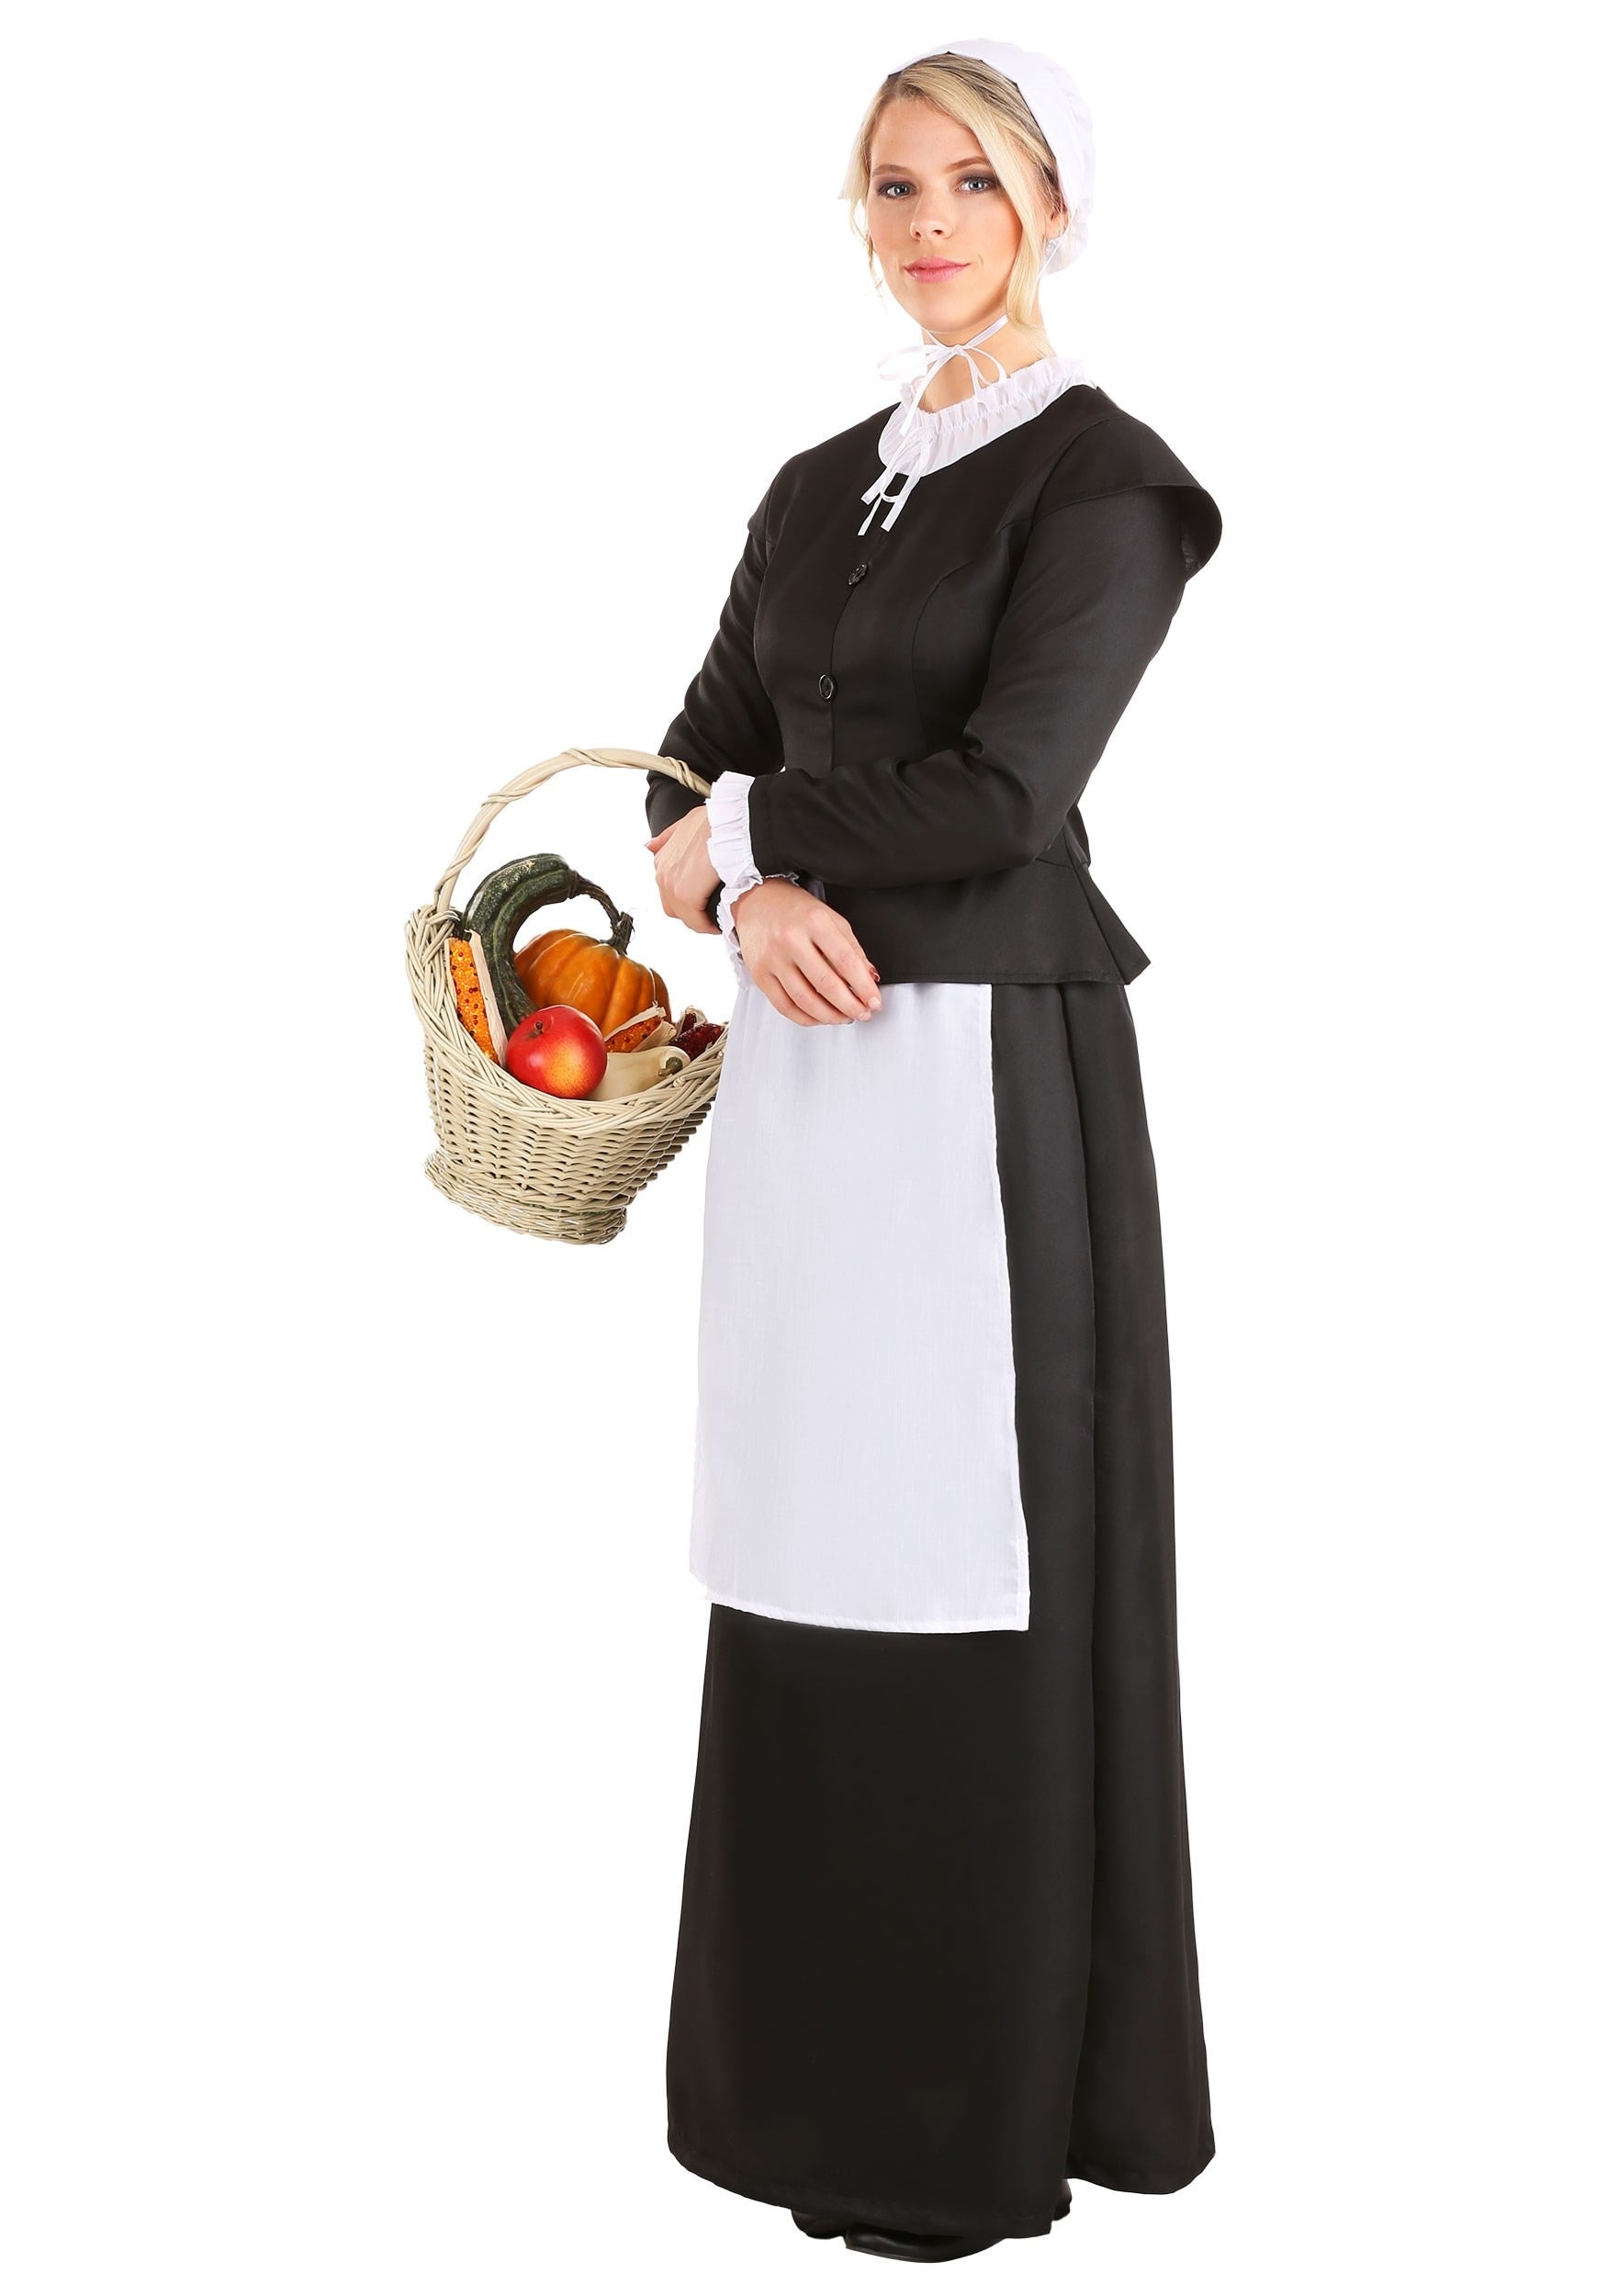 New European Pastoral Farm Garden Dress Black White Maid Costume Halloween Cosplay Maid Costumes For Adult Women